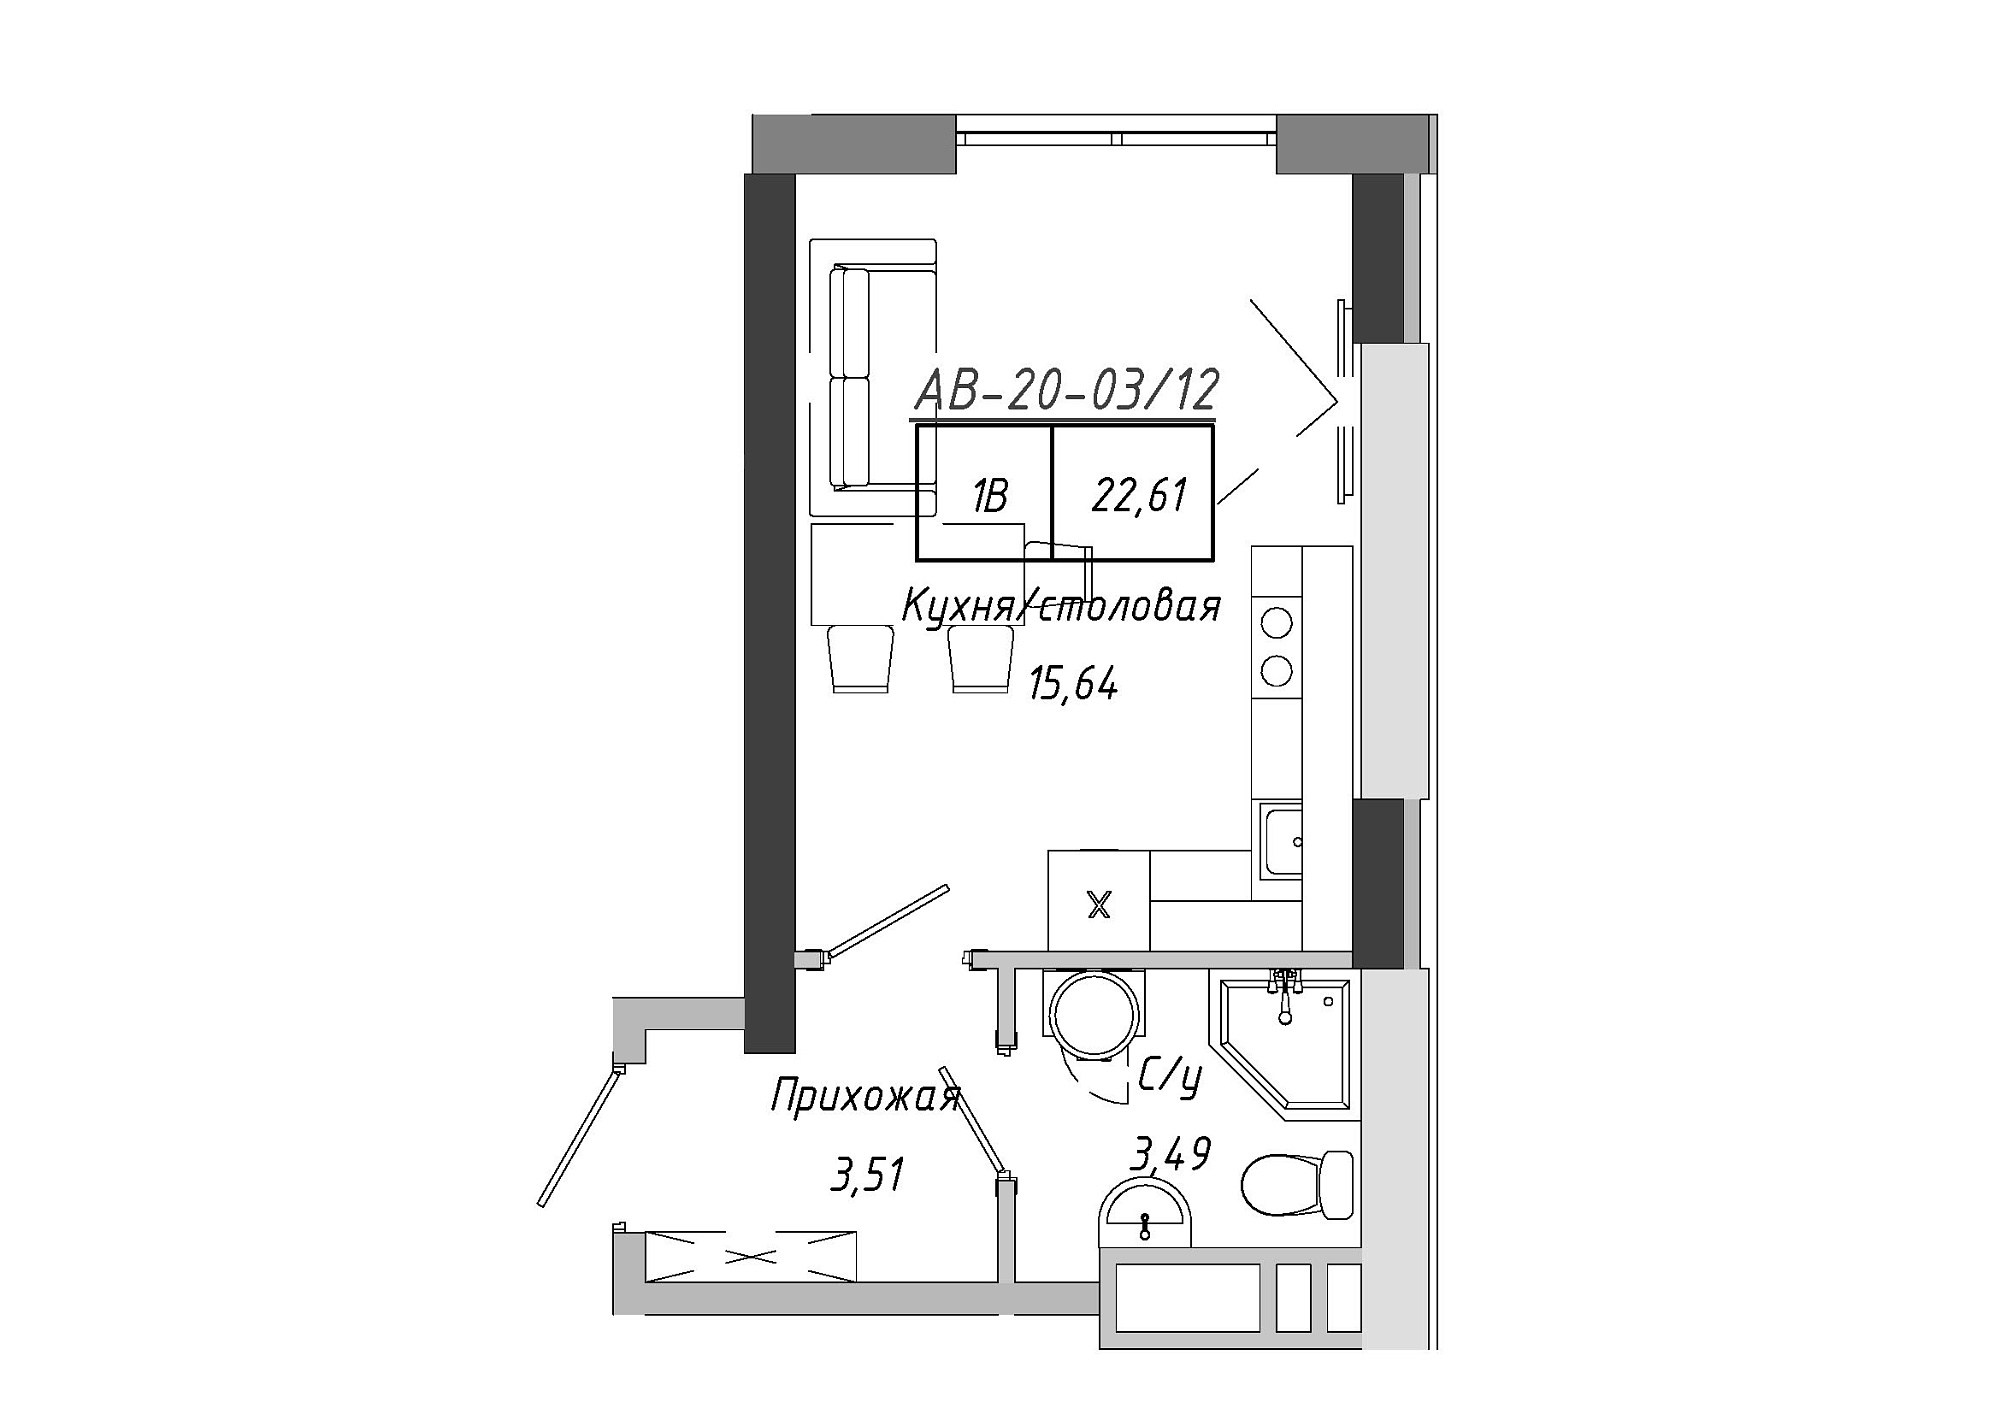 Planning Smart flats area 22.61m2, AB-20-03/00012.